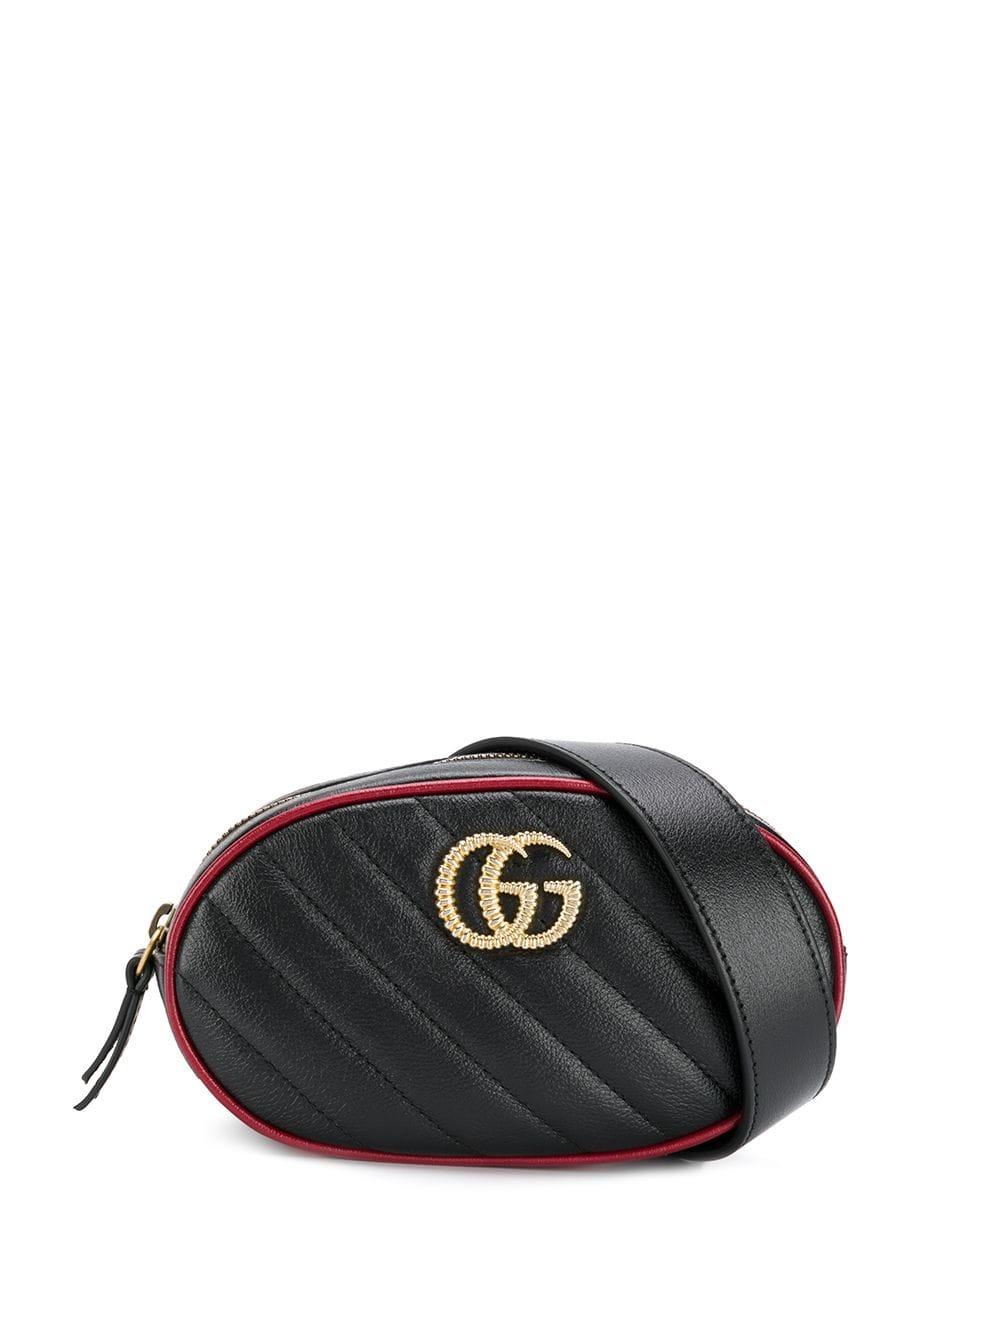 Gucci GG Marmont Matelassé Belt Bag in Black - Lyst